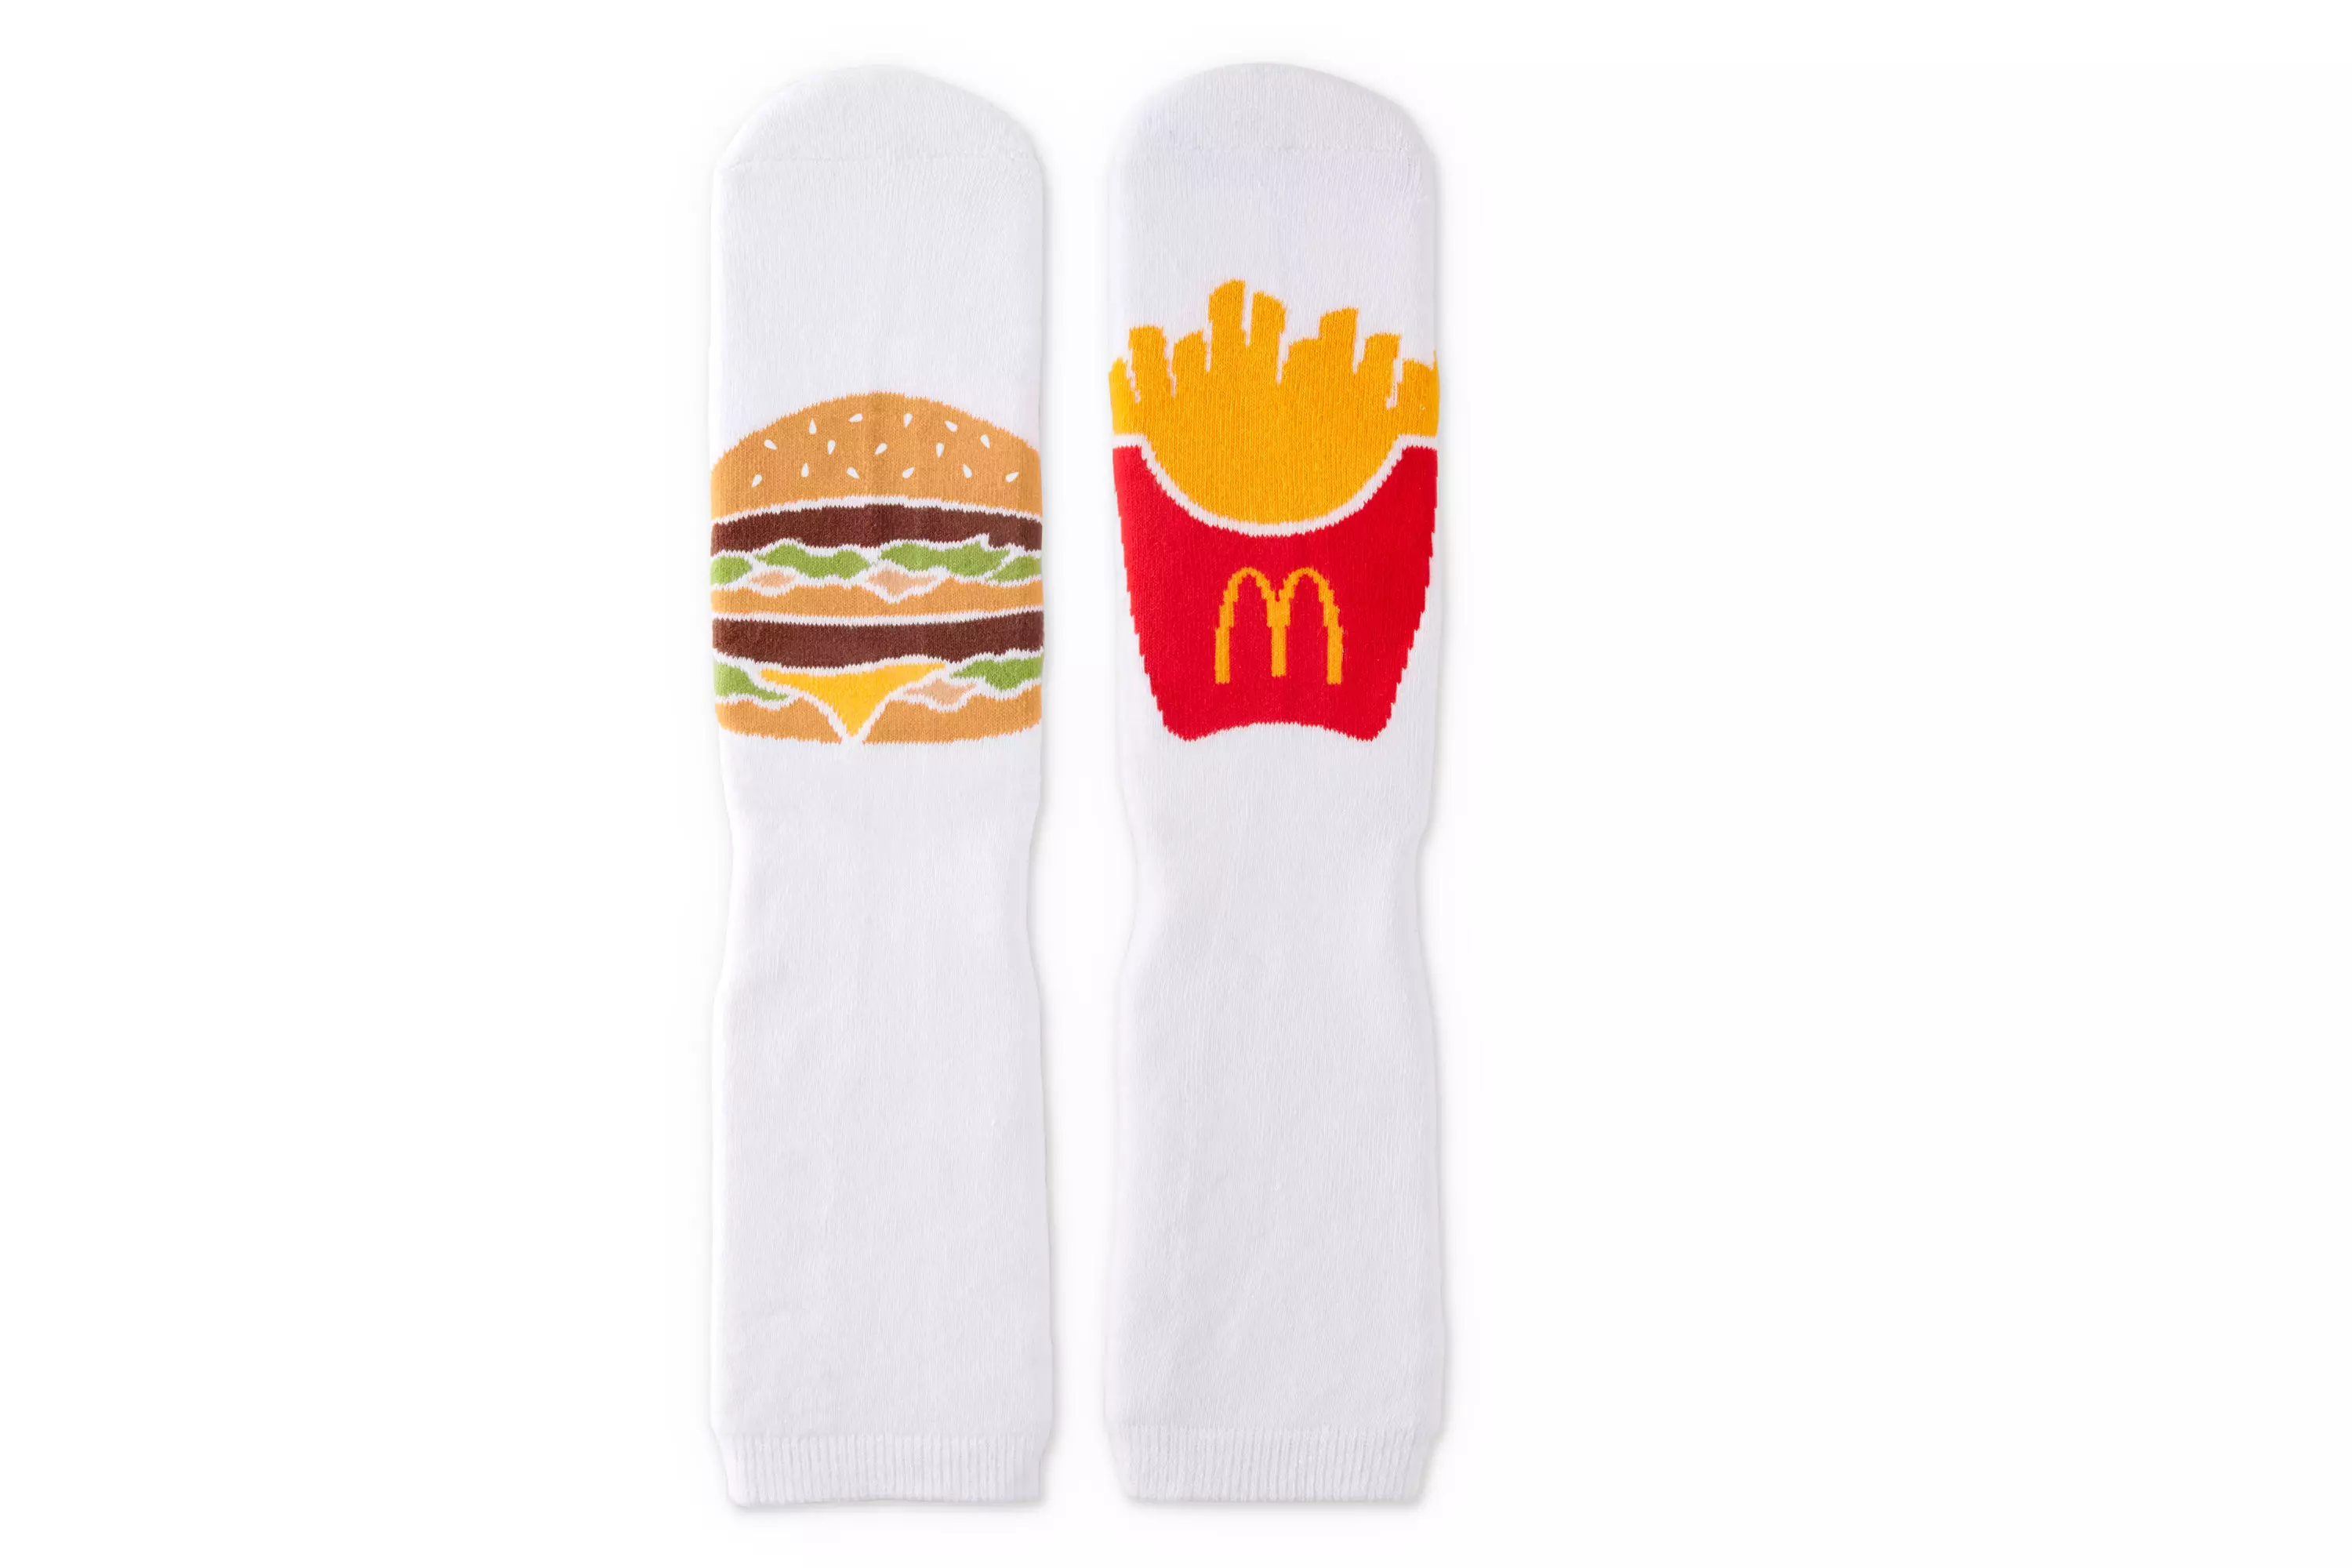 Big Mac and fries fuzzy socks.